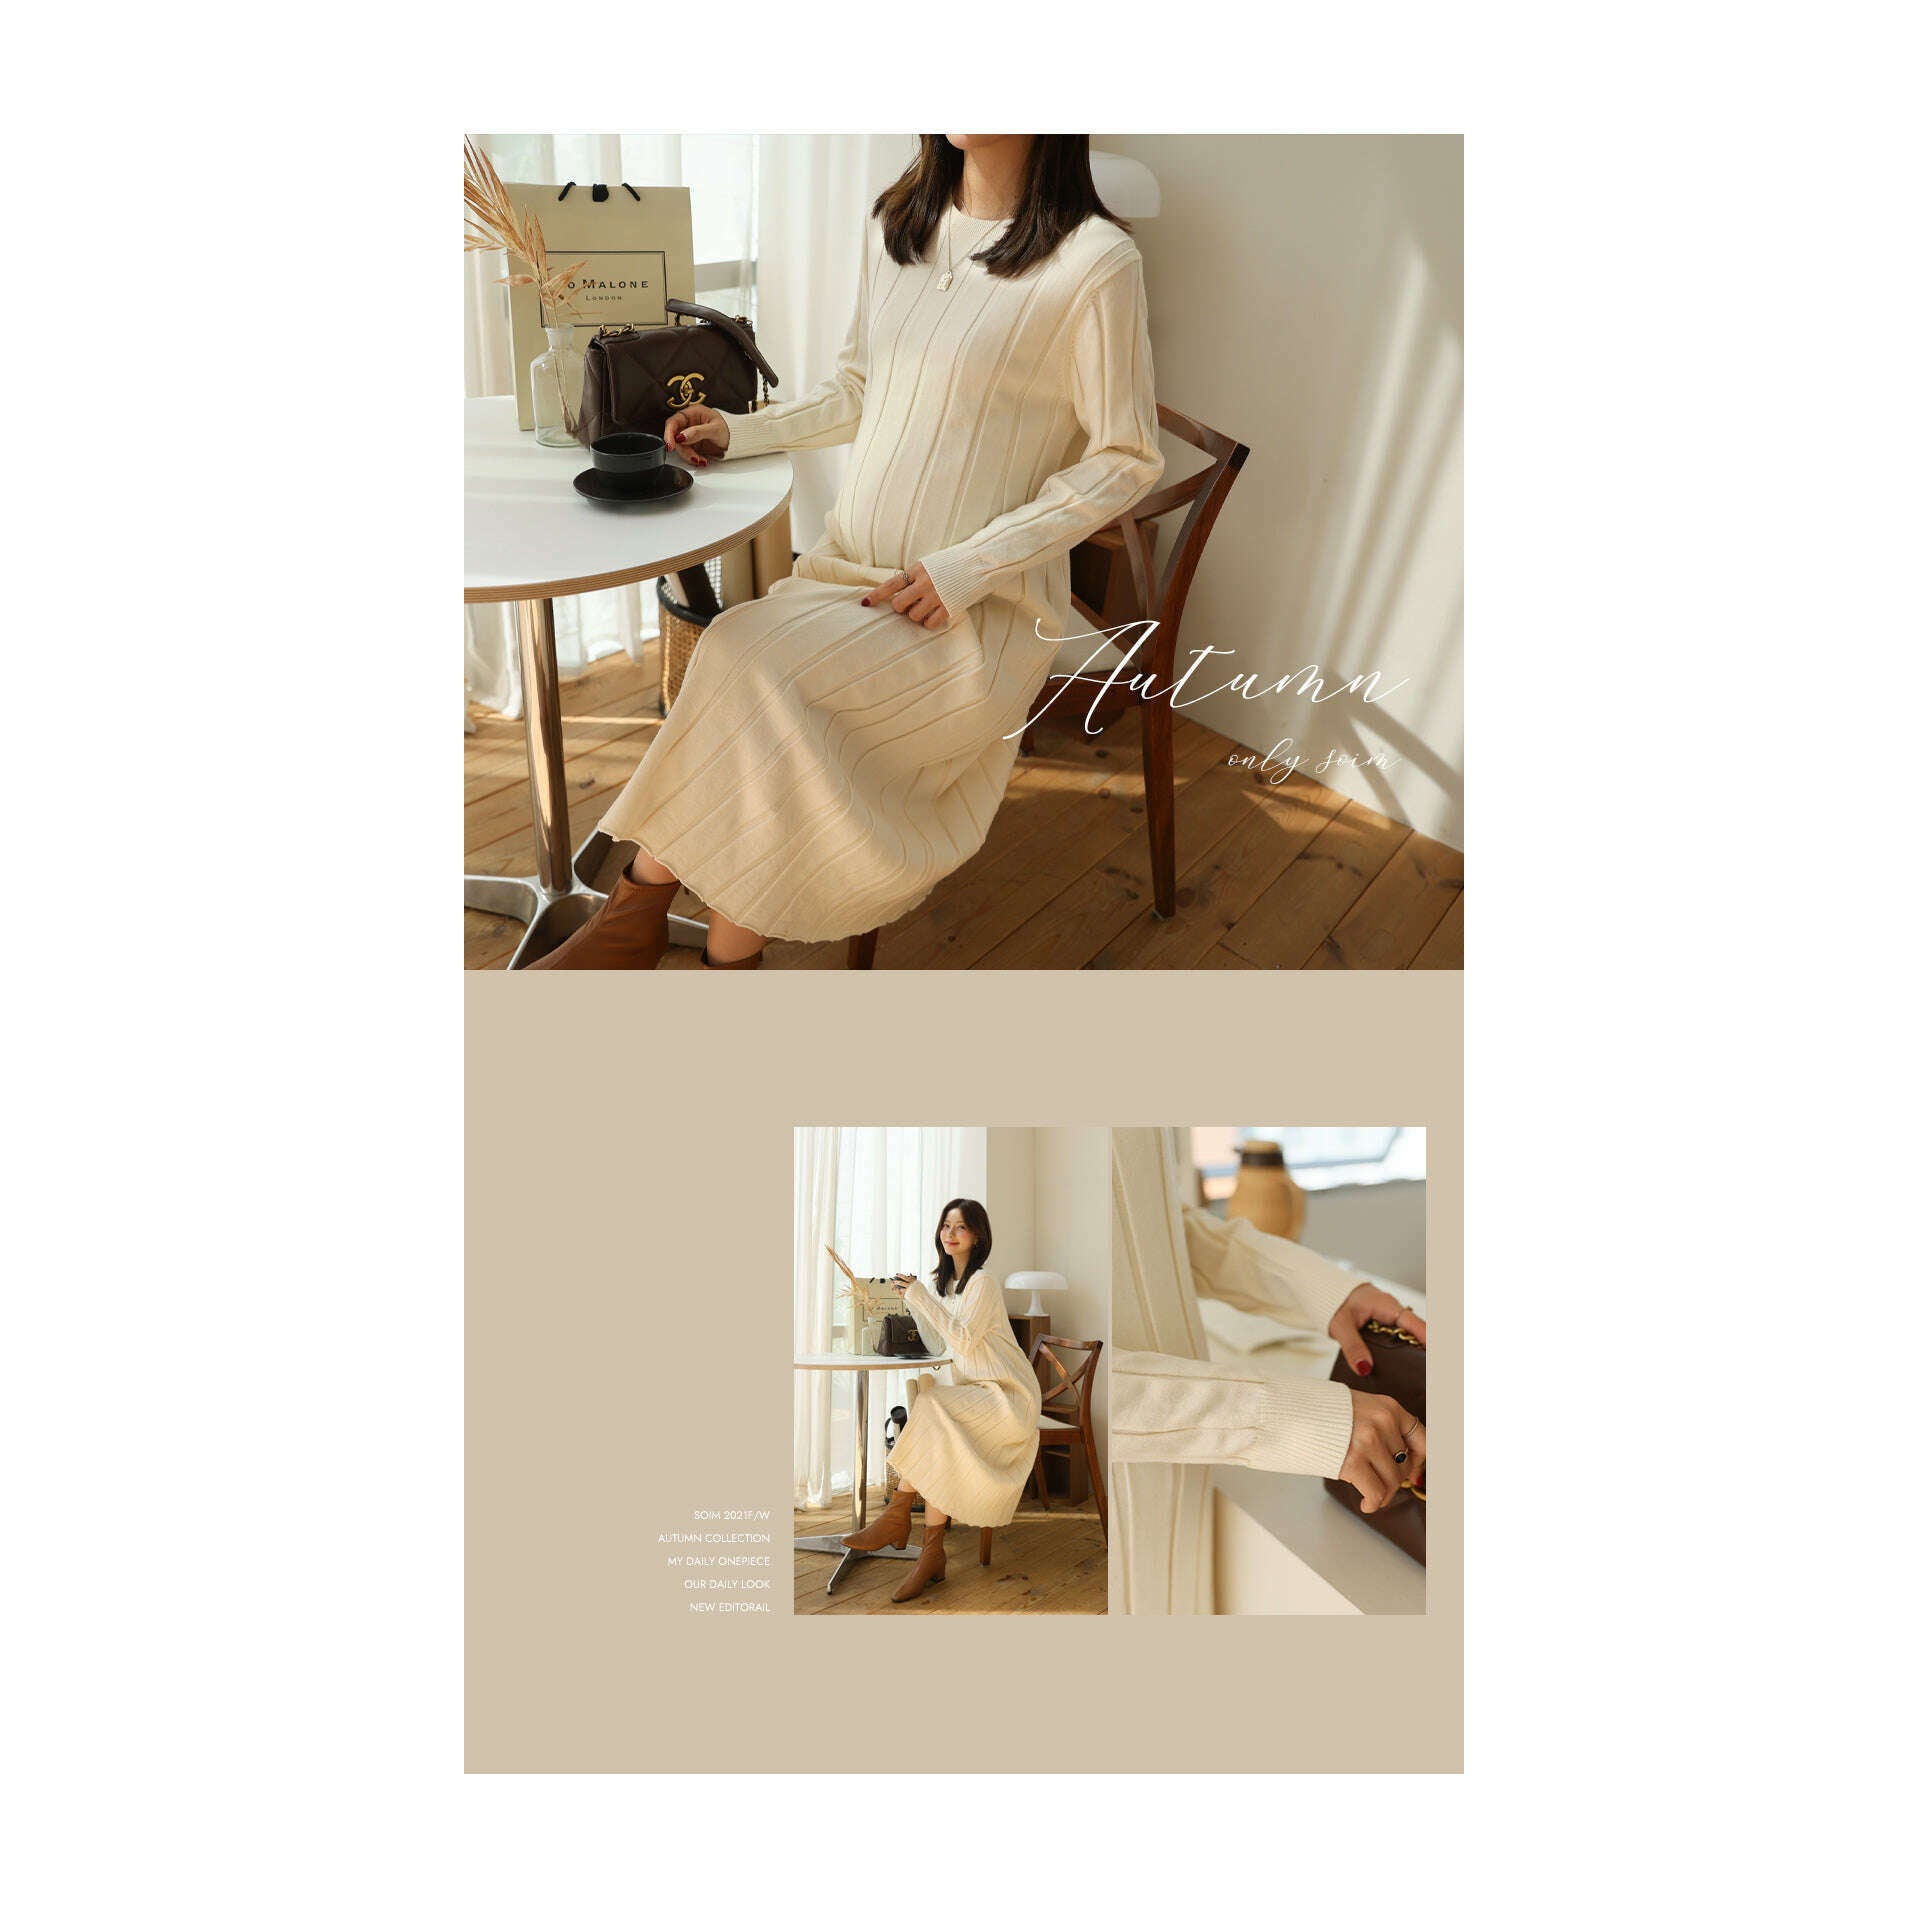 MUMMY.cc:直紋長袖微喇叭針織連身裙